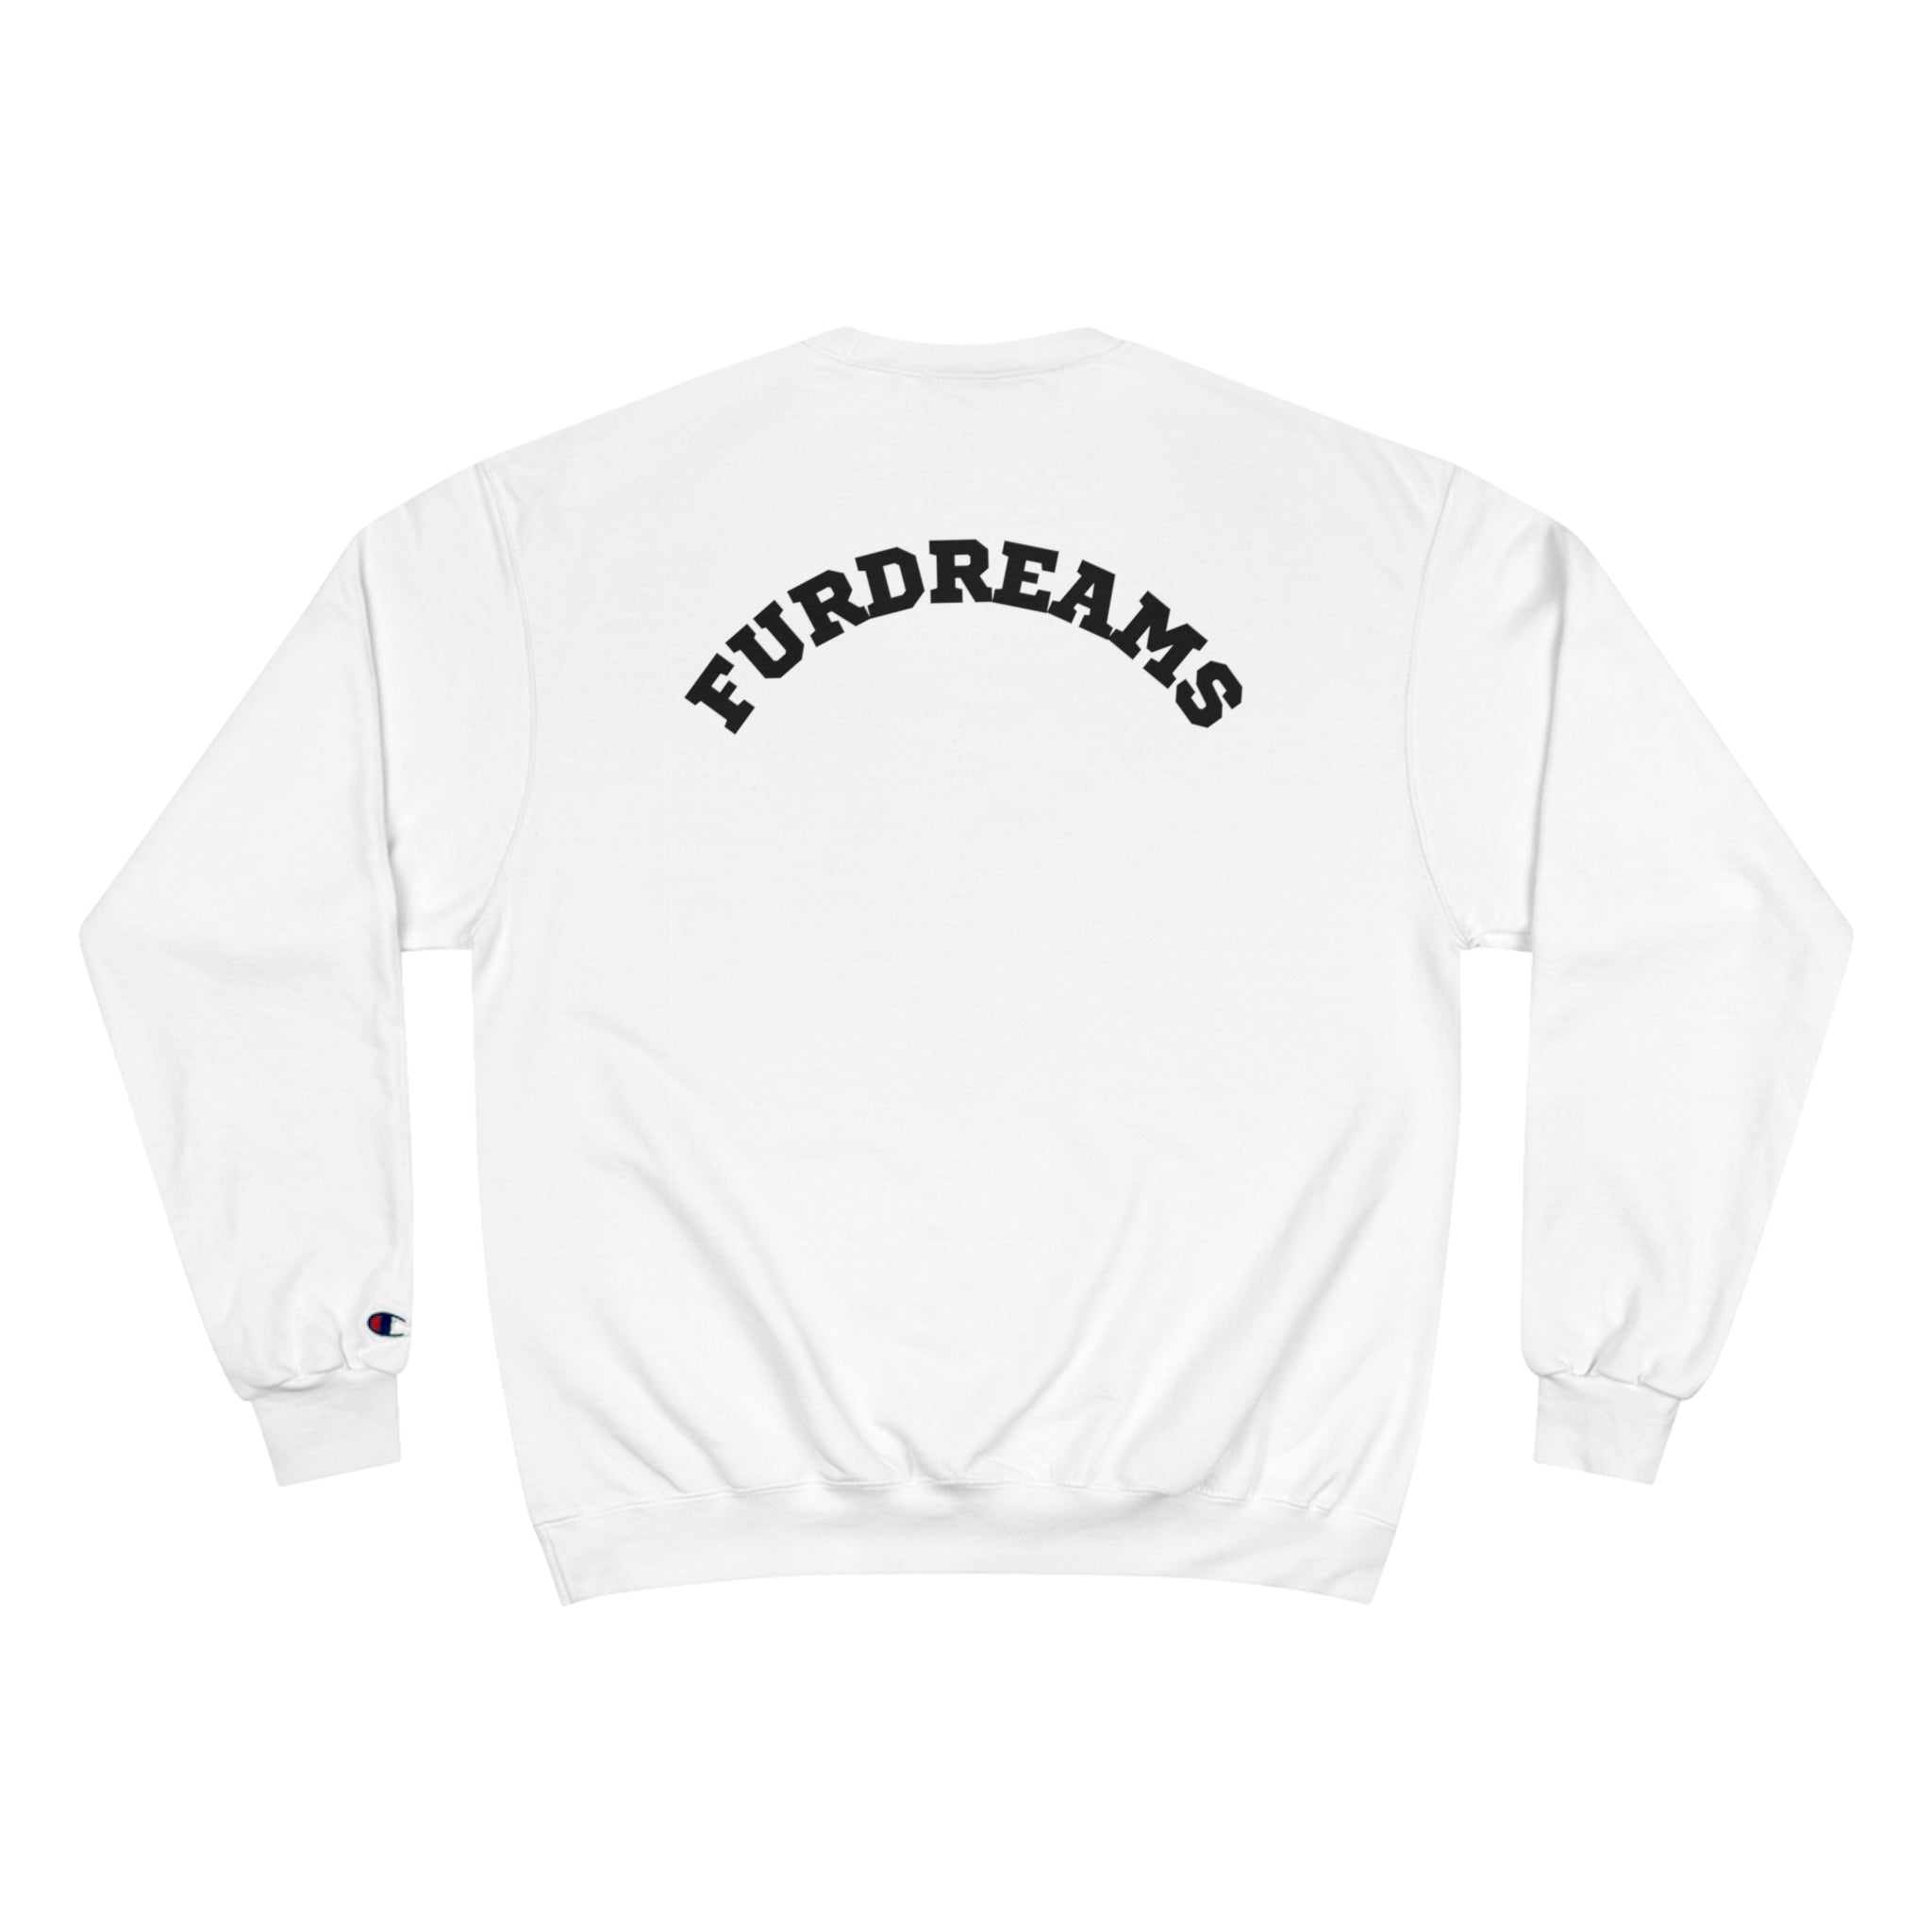 FURDreams ”LVS” VIII Champion Sweatshirt